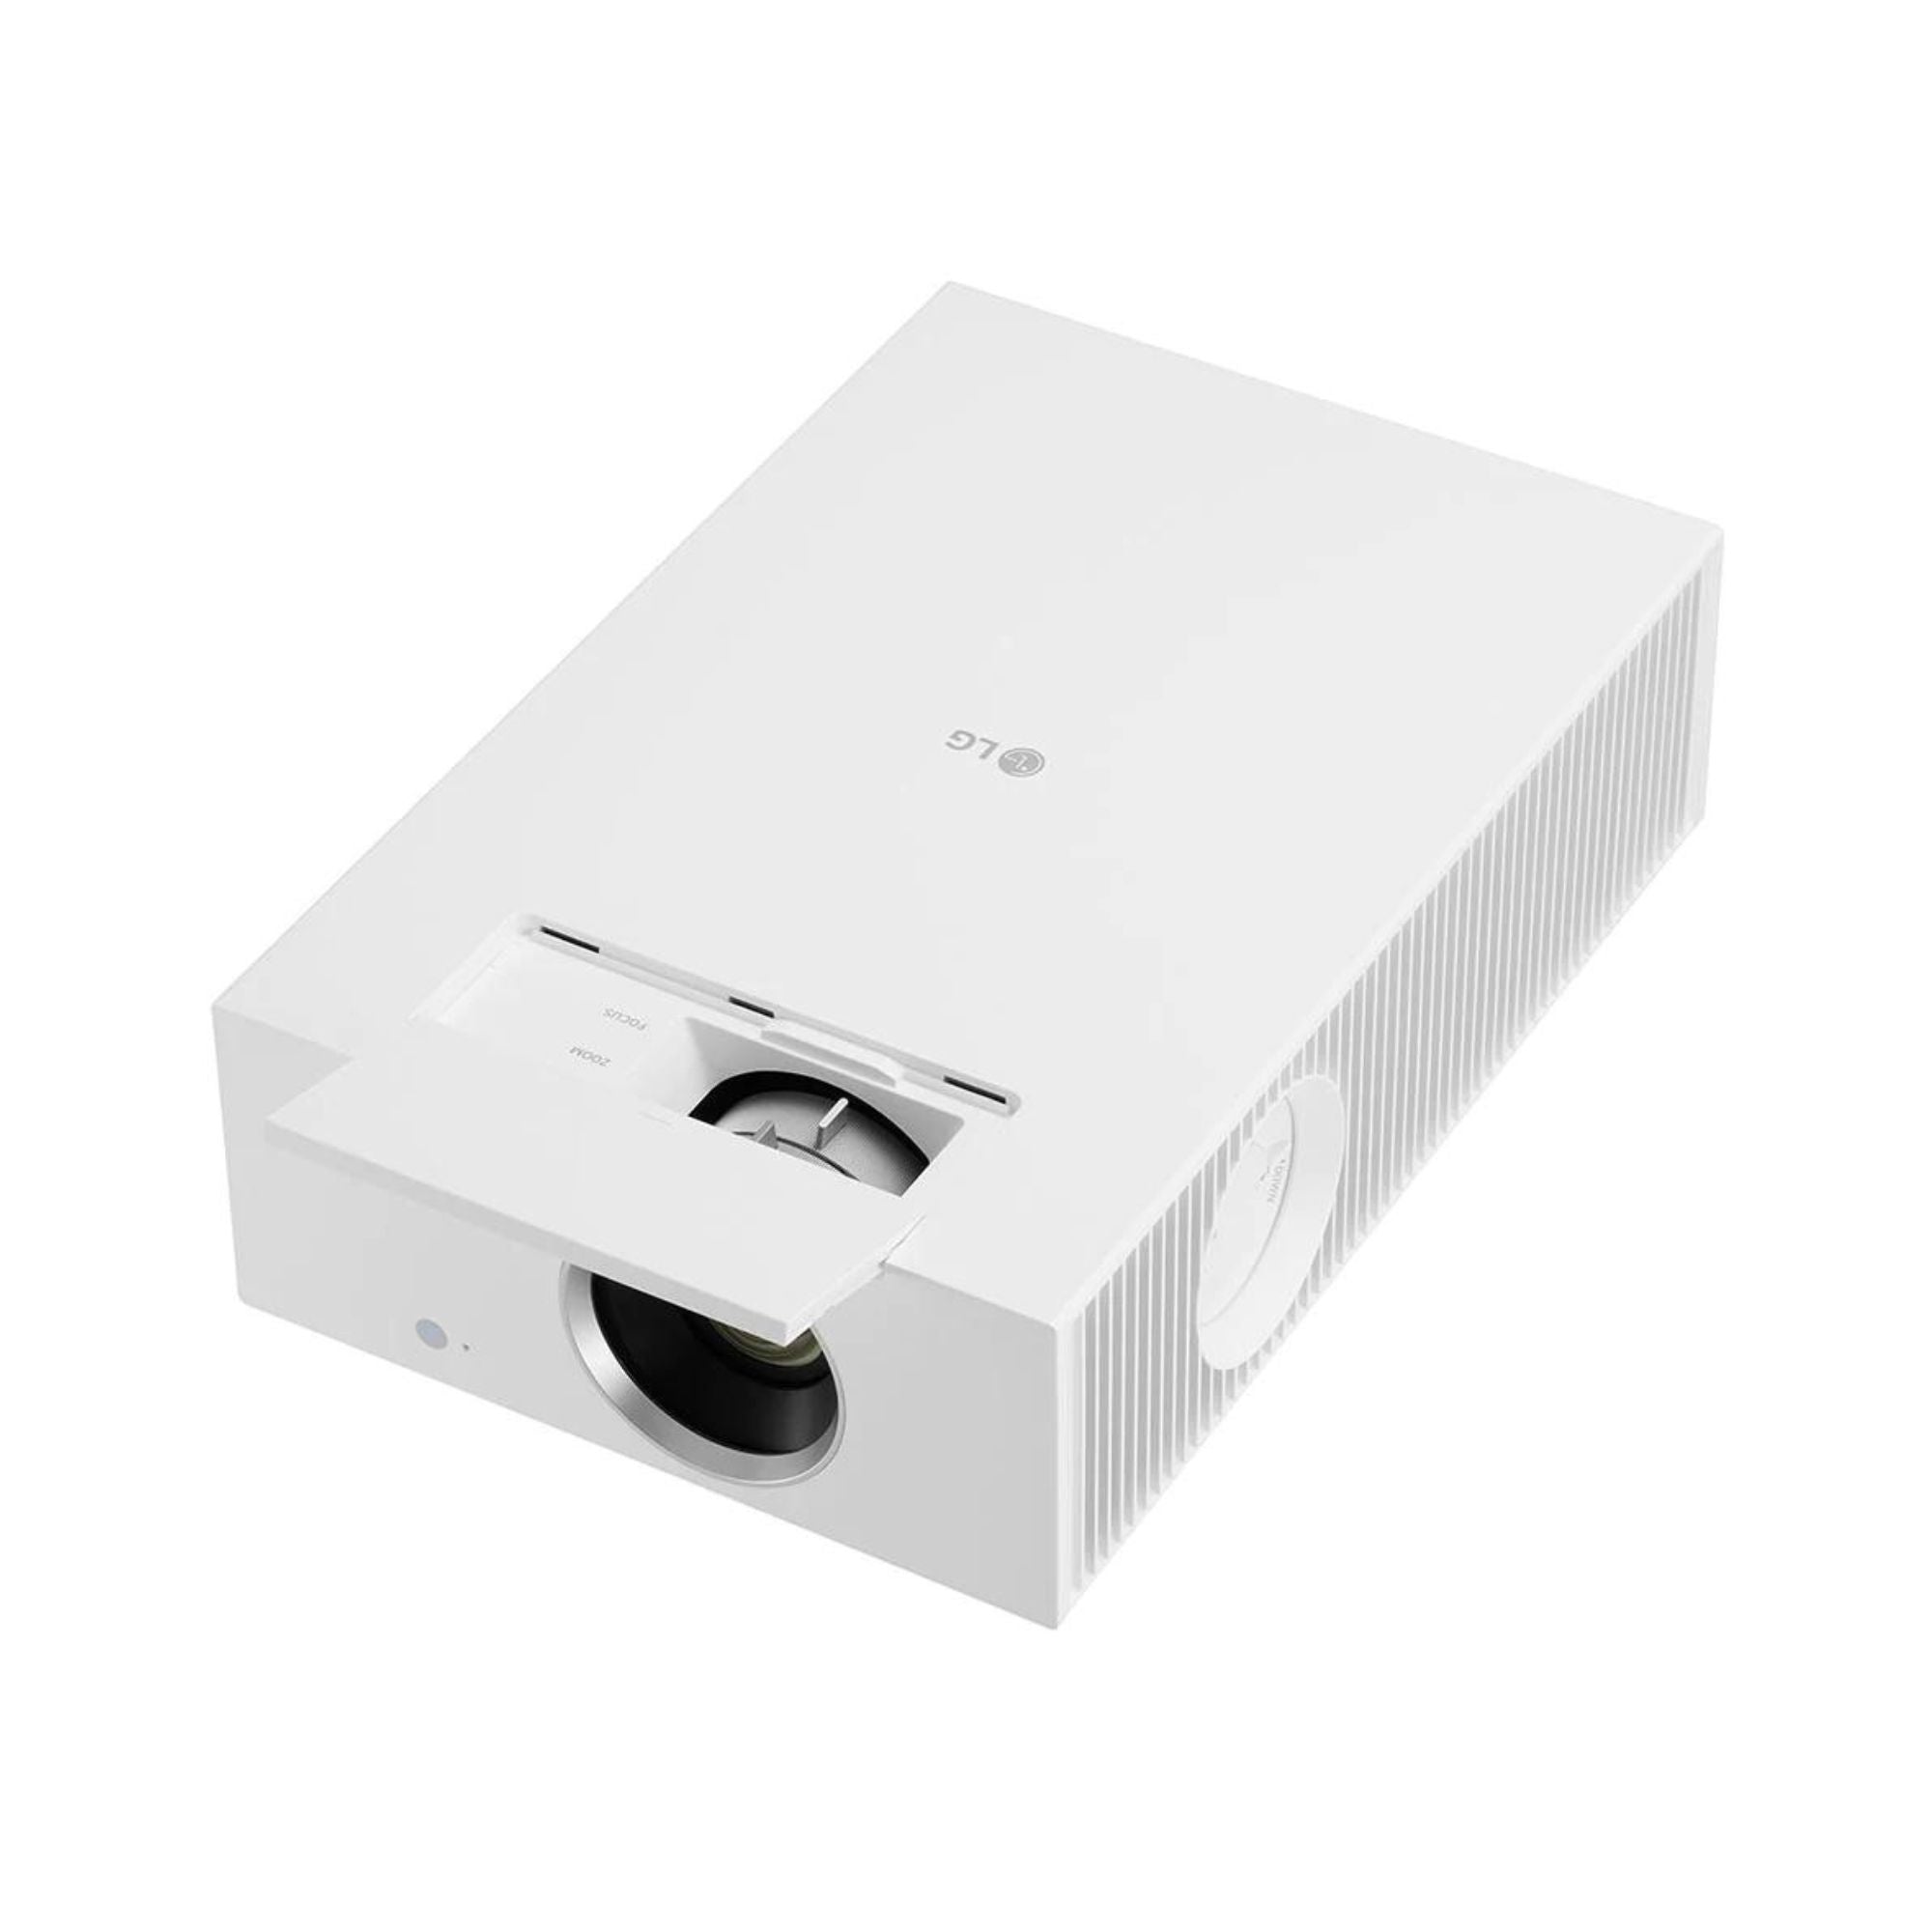 LG Projectors HU710PW - 4K UHD Hybrid Home Cinema Projector - AVStore